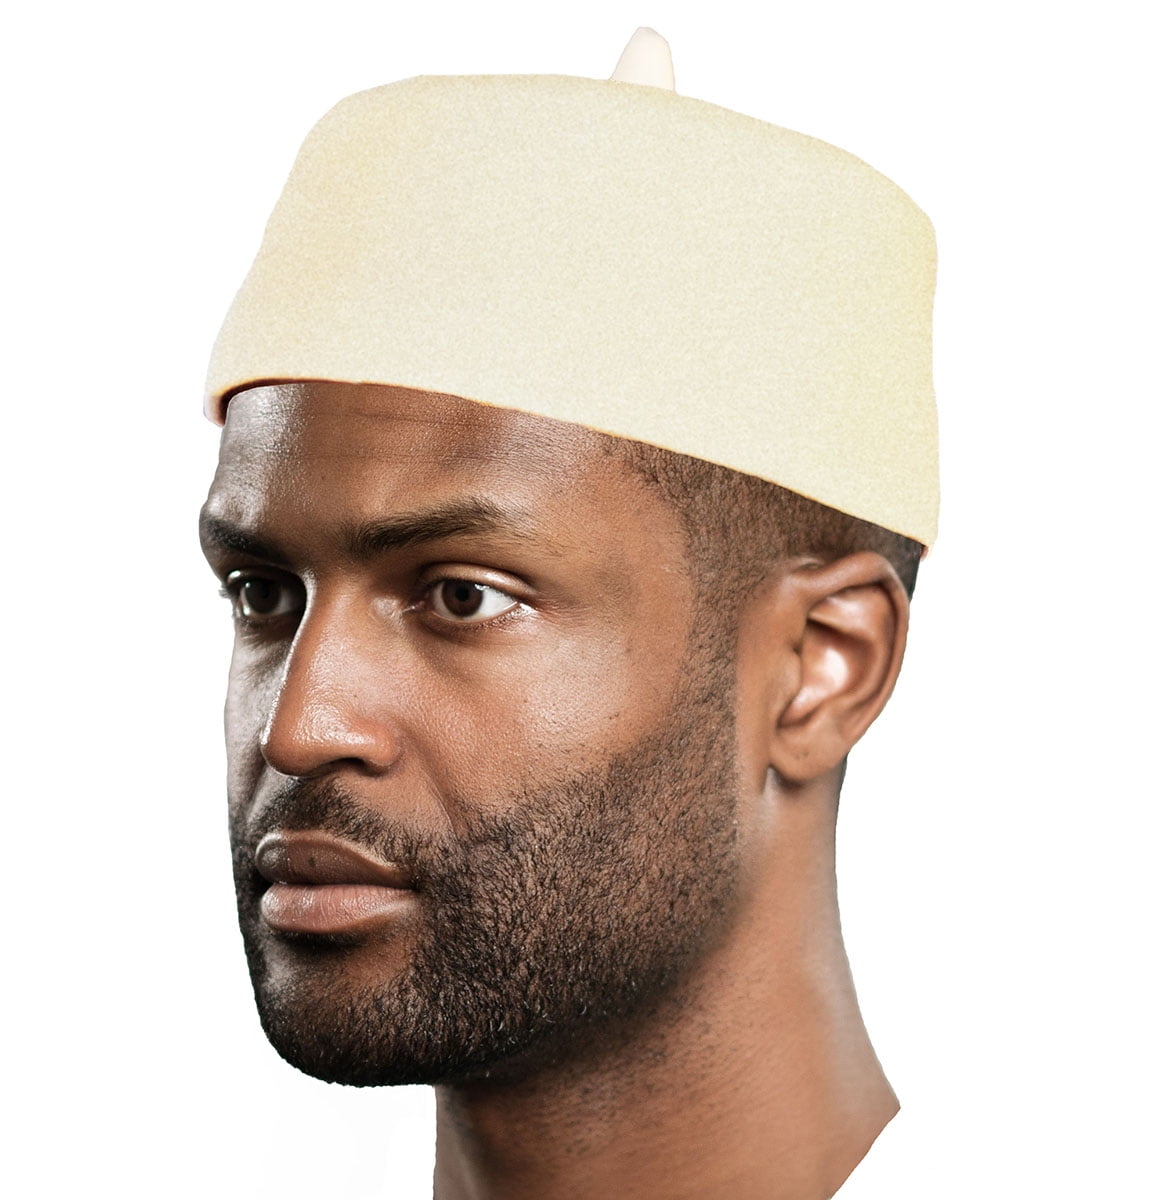 Fez men's hat Kente pattern on cotton blend new large  size  7 1/4 Kufi 